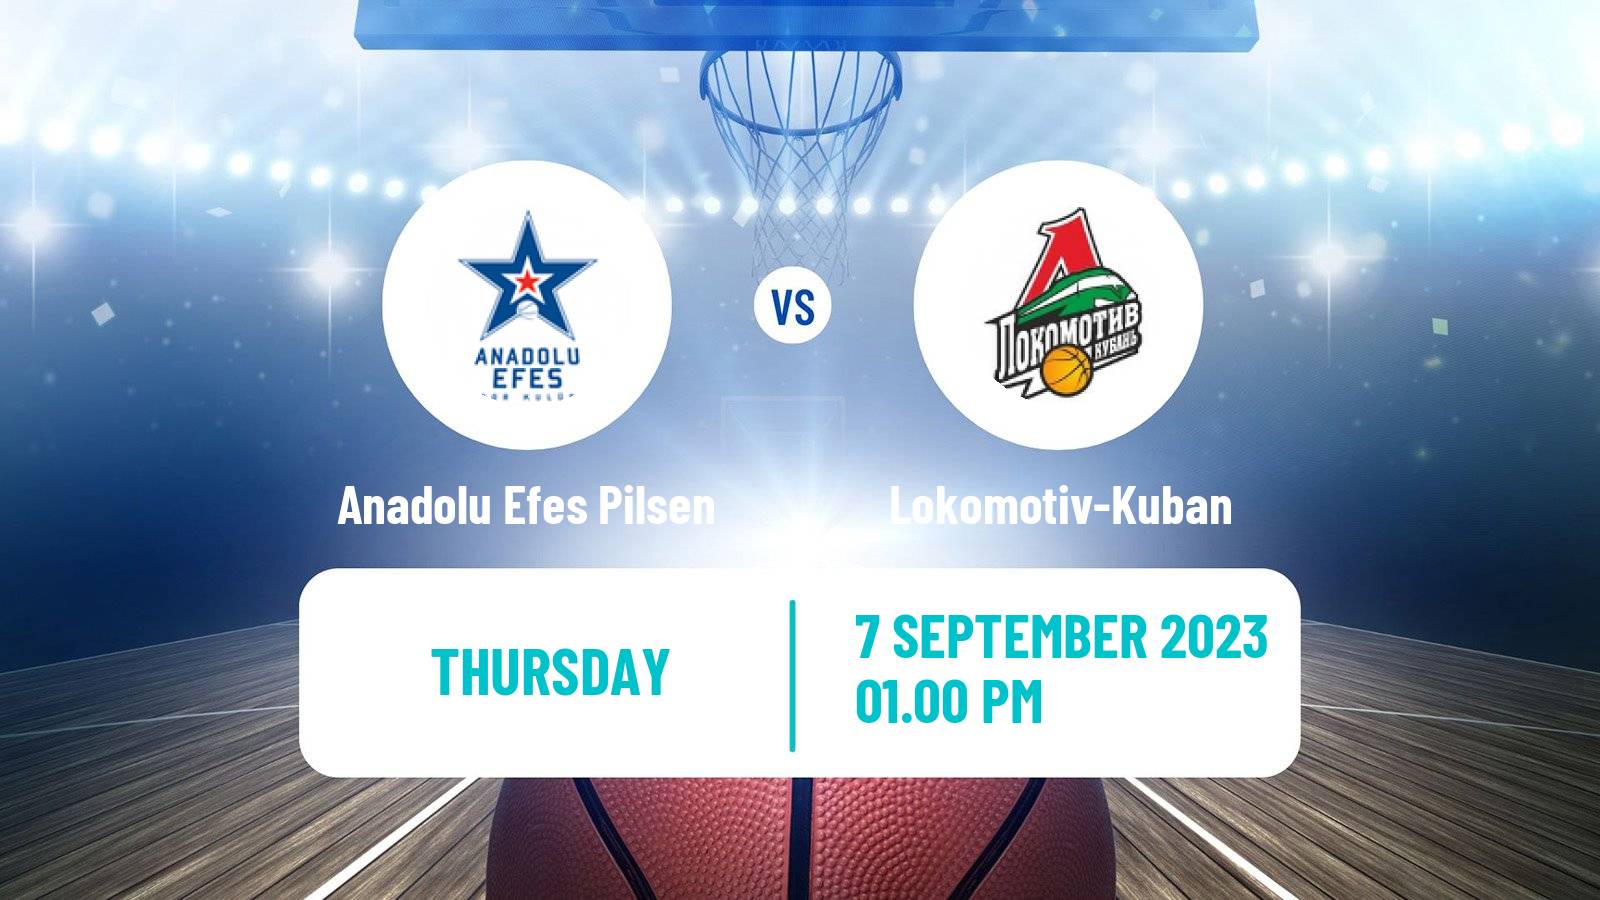 Basketball Club Friendly Basketball Anadolu Efes Pilsen - Lokomotiv-Kuban